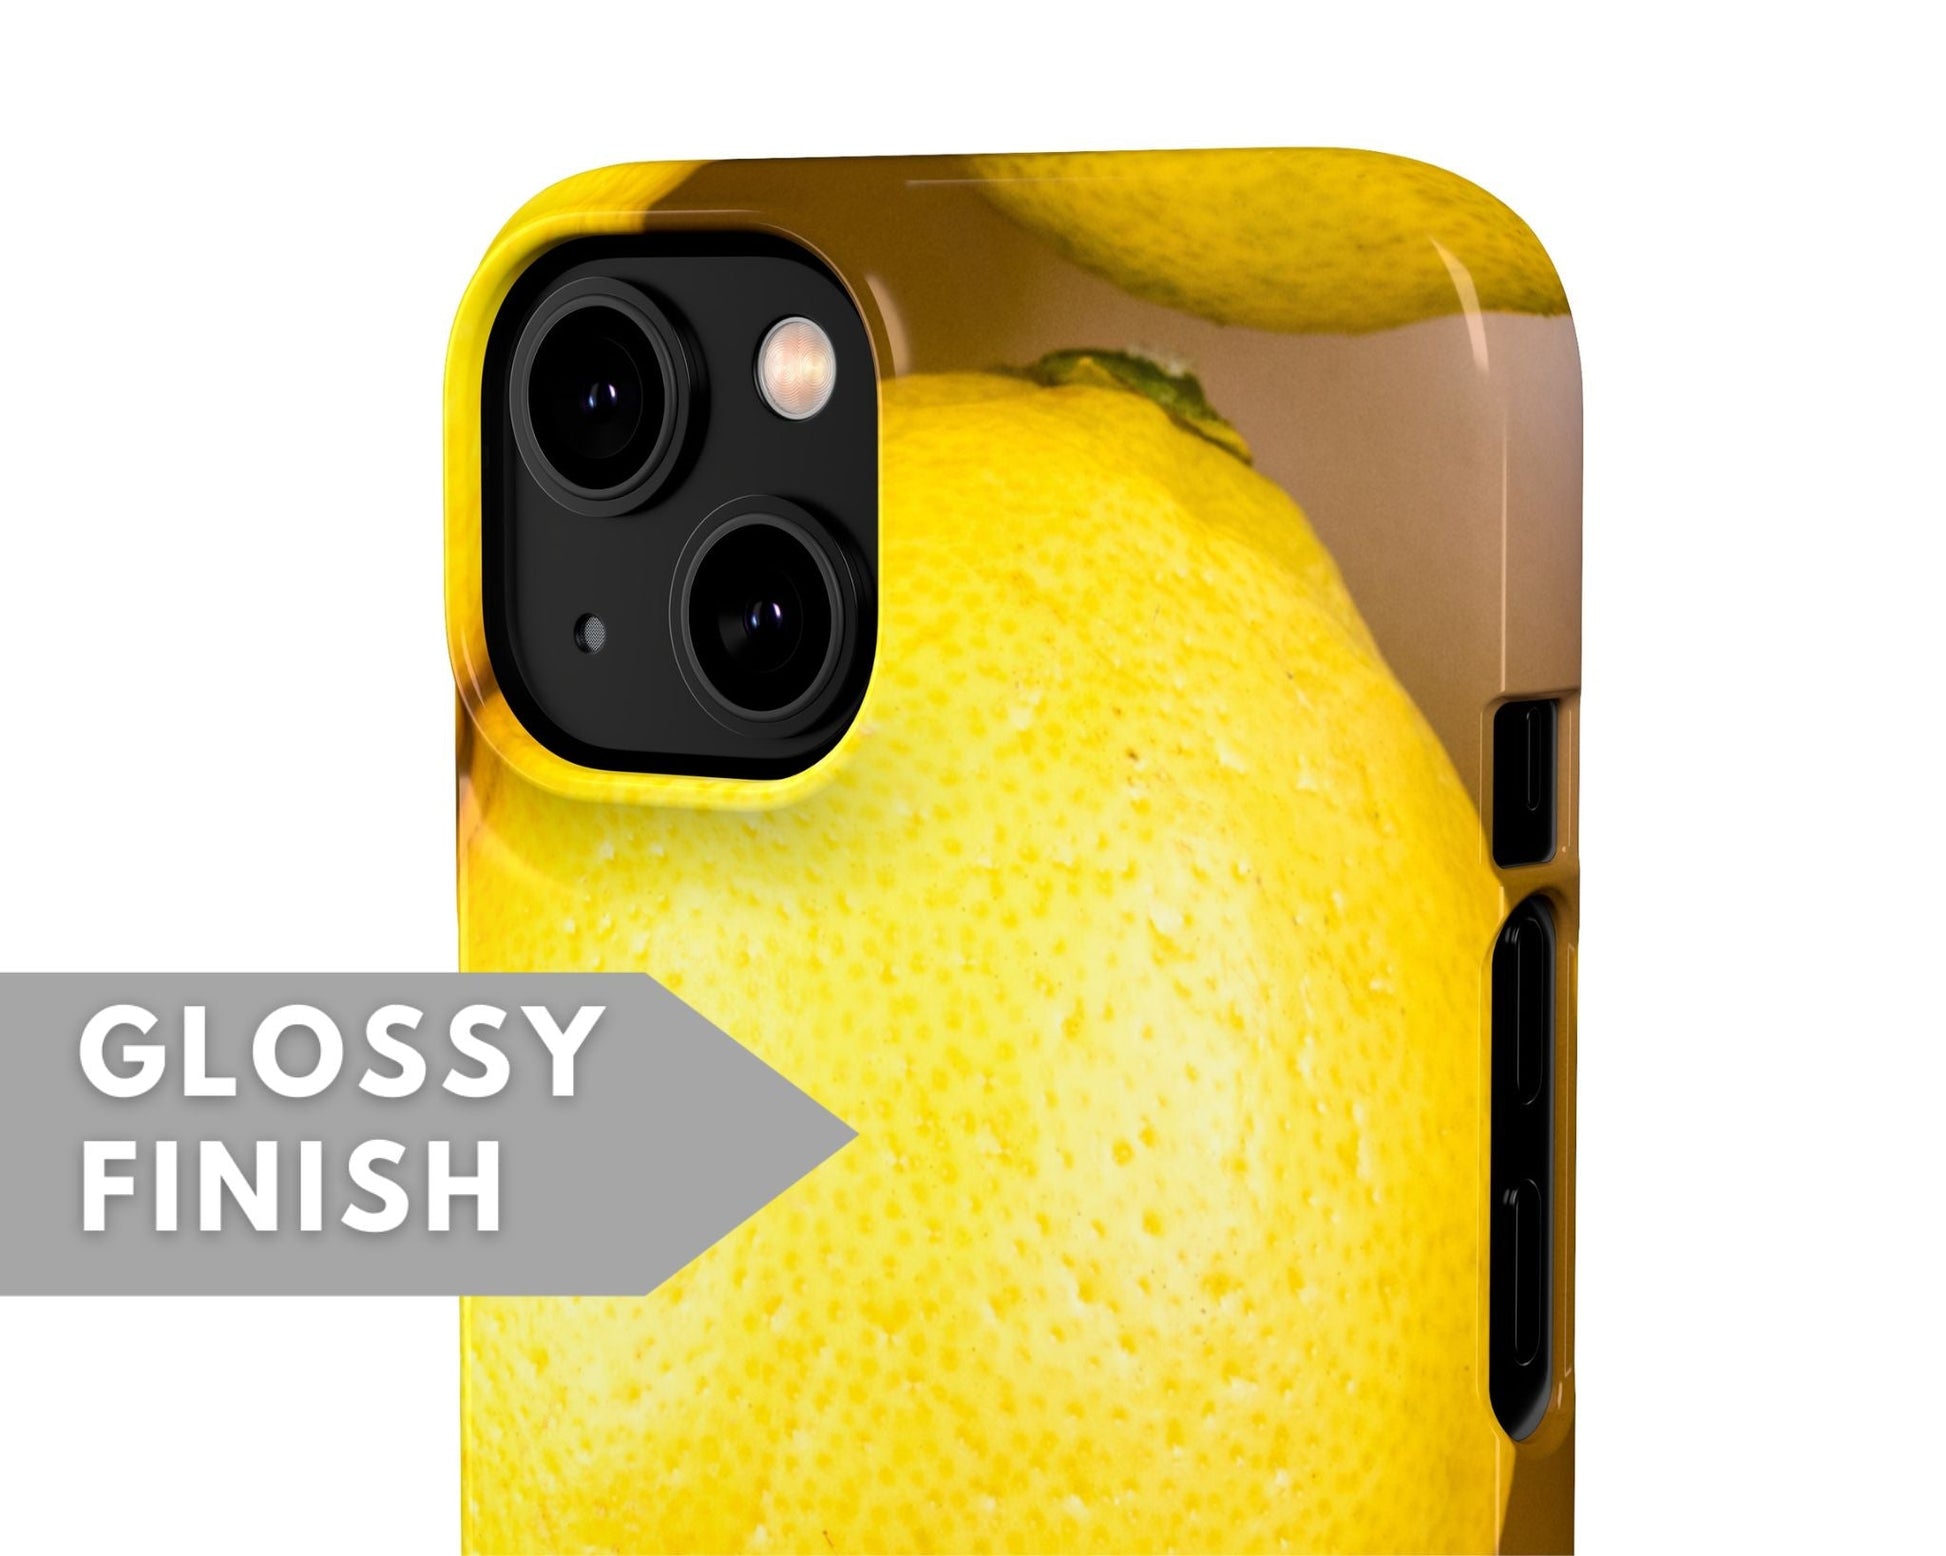 Big Lemons Snap Case - Classy Cases